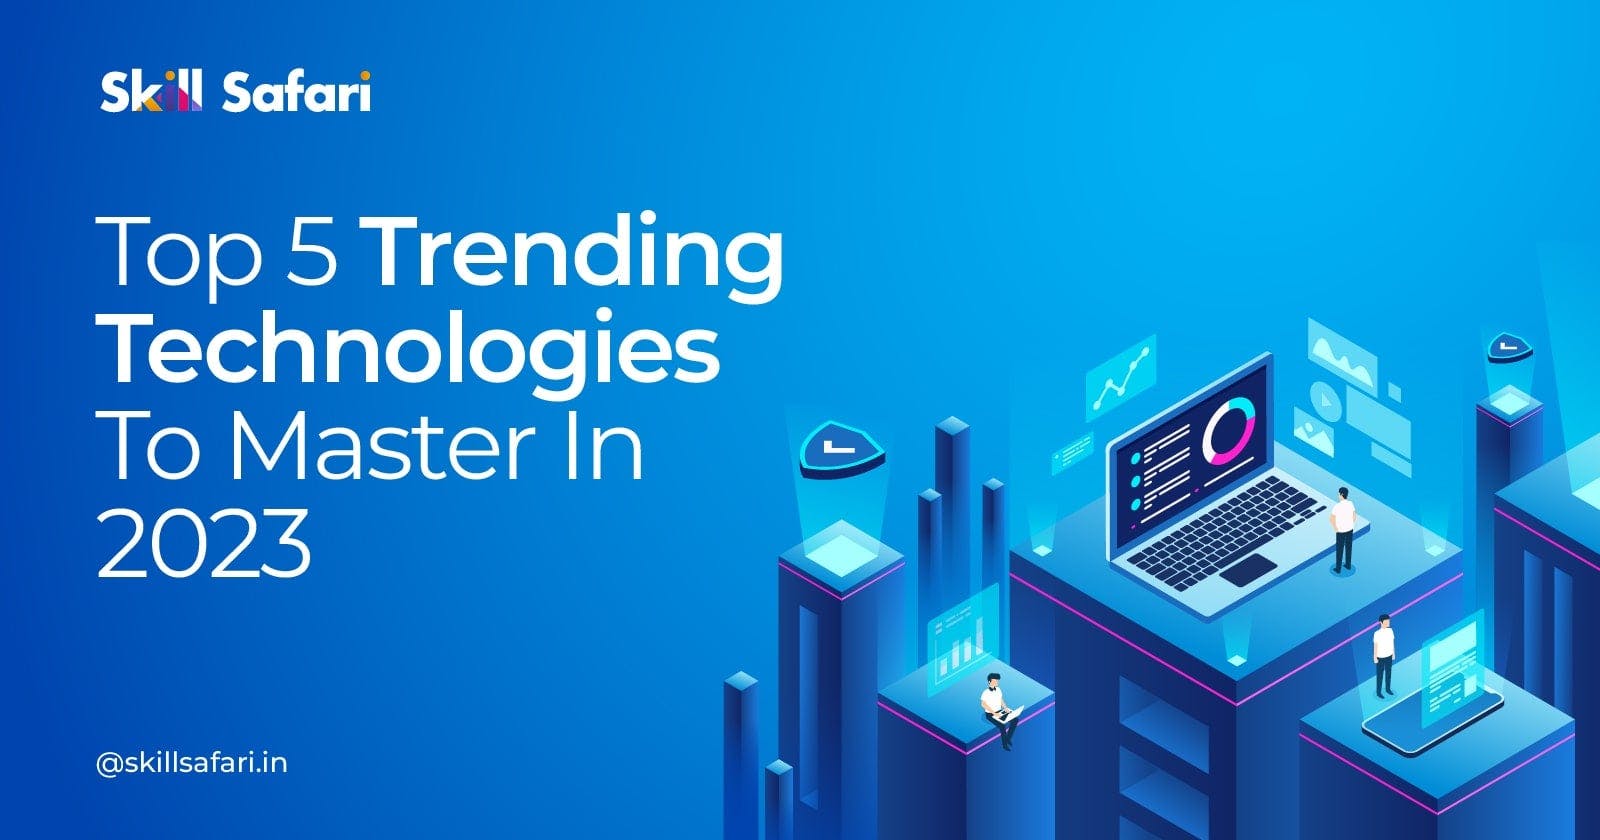 Top 5 Trending Technologies To Master In 2023